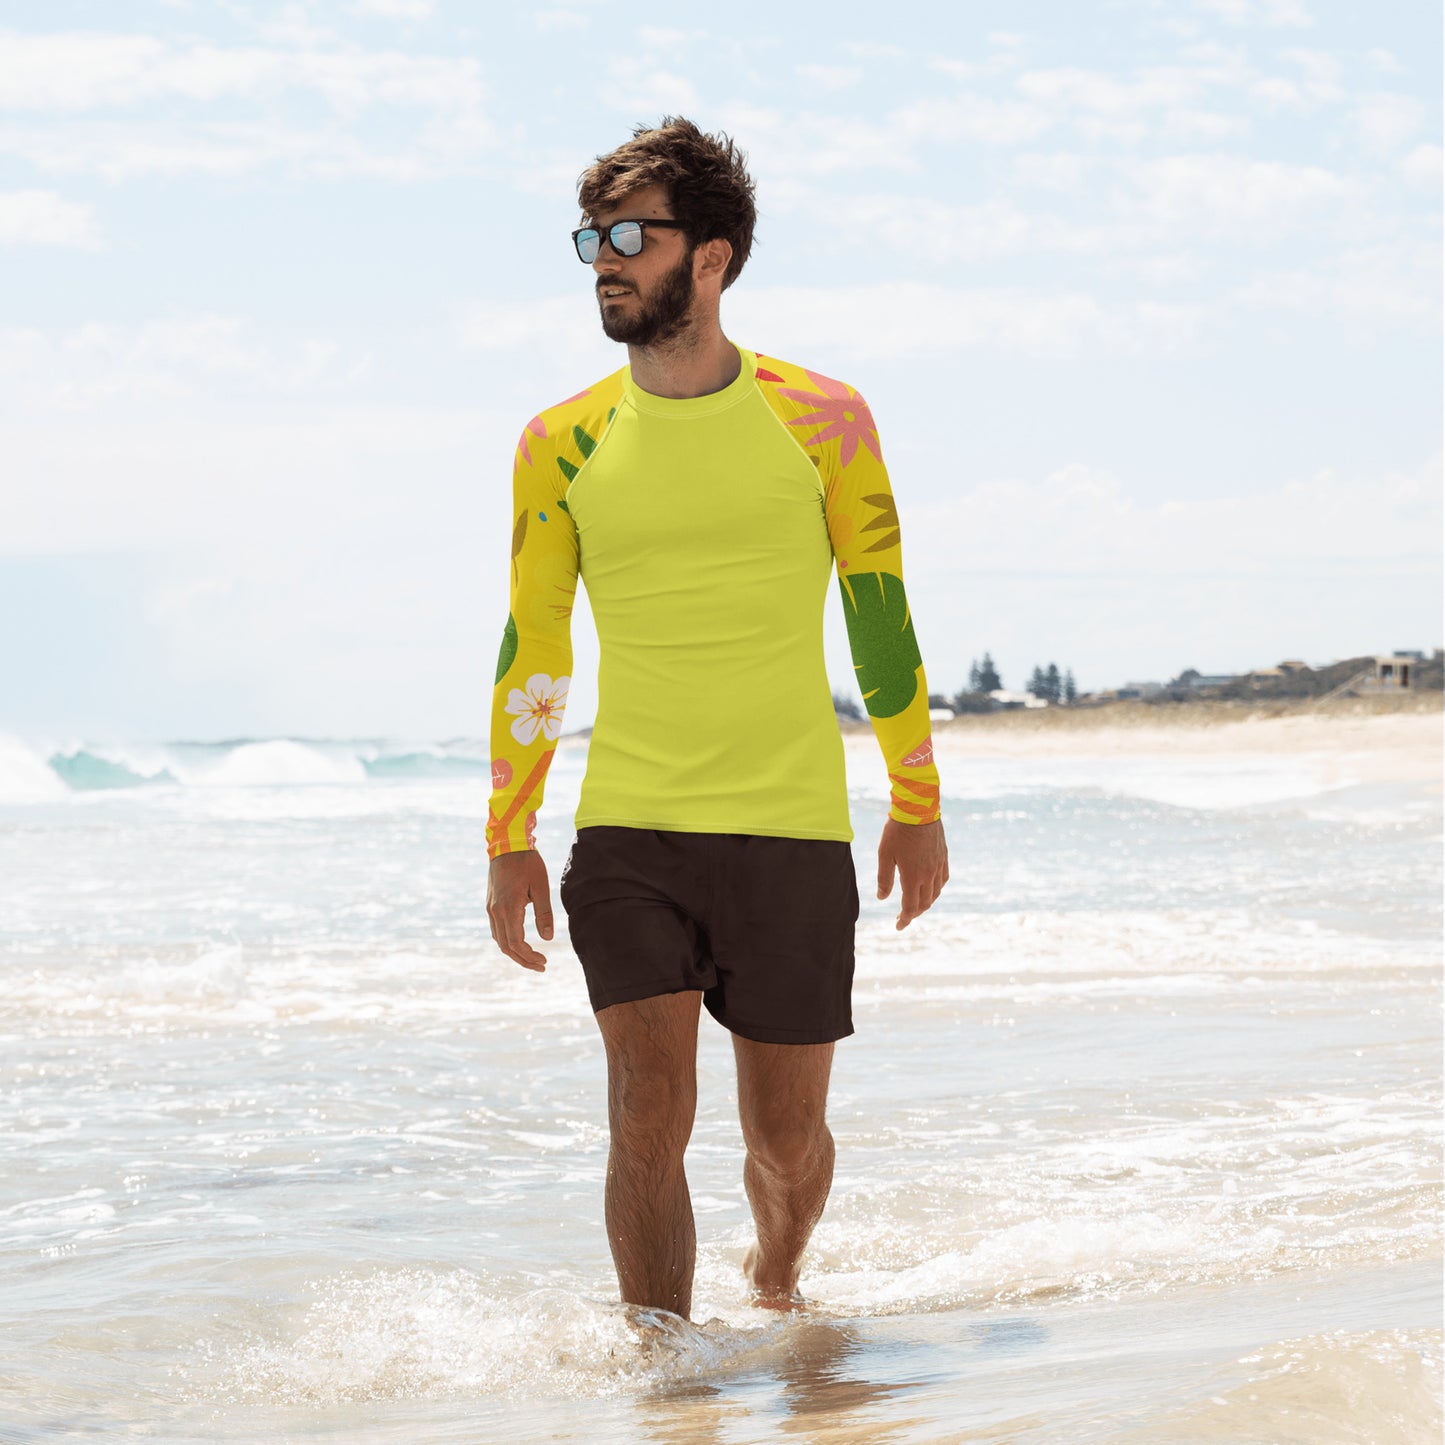 Surf in Style: Men's High-Performance Rash Guard - The Leafy Islander